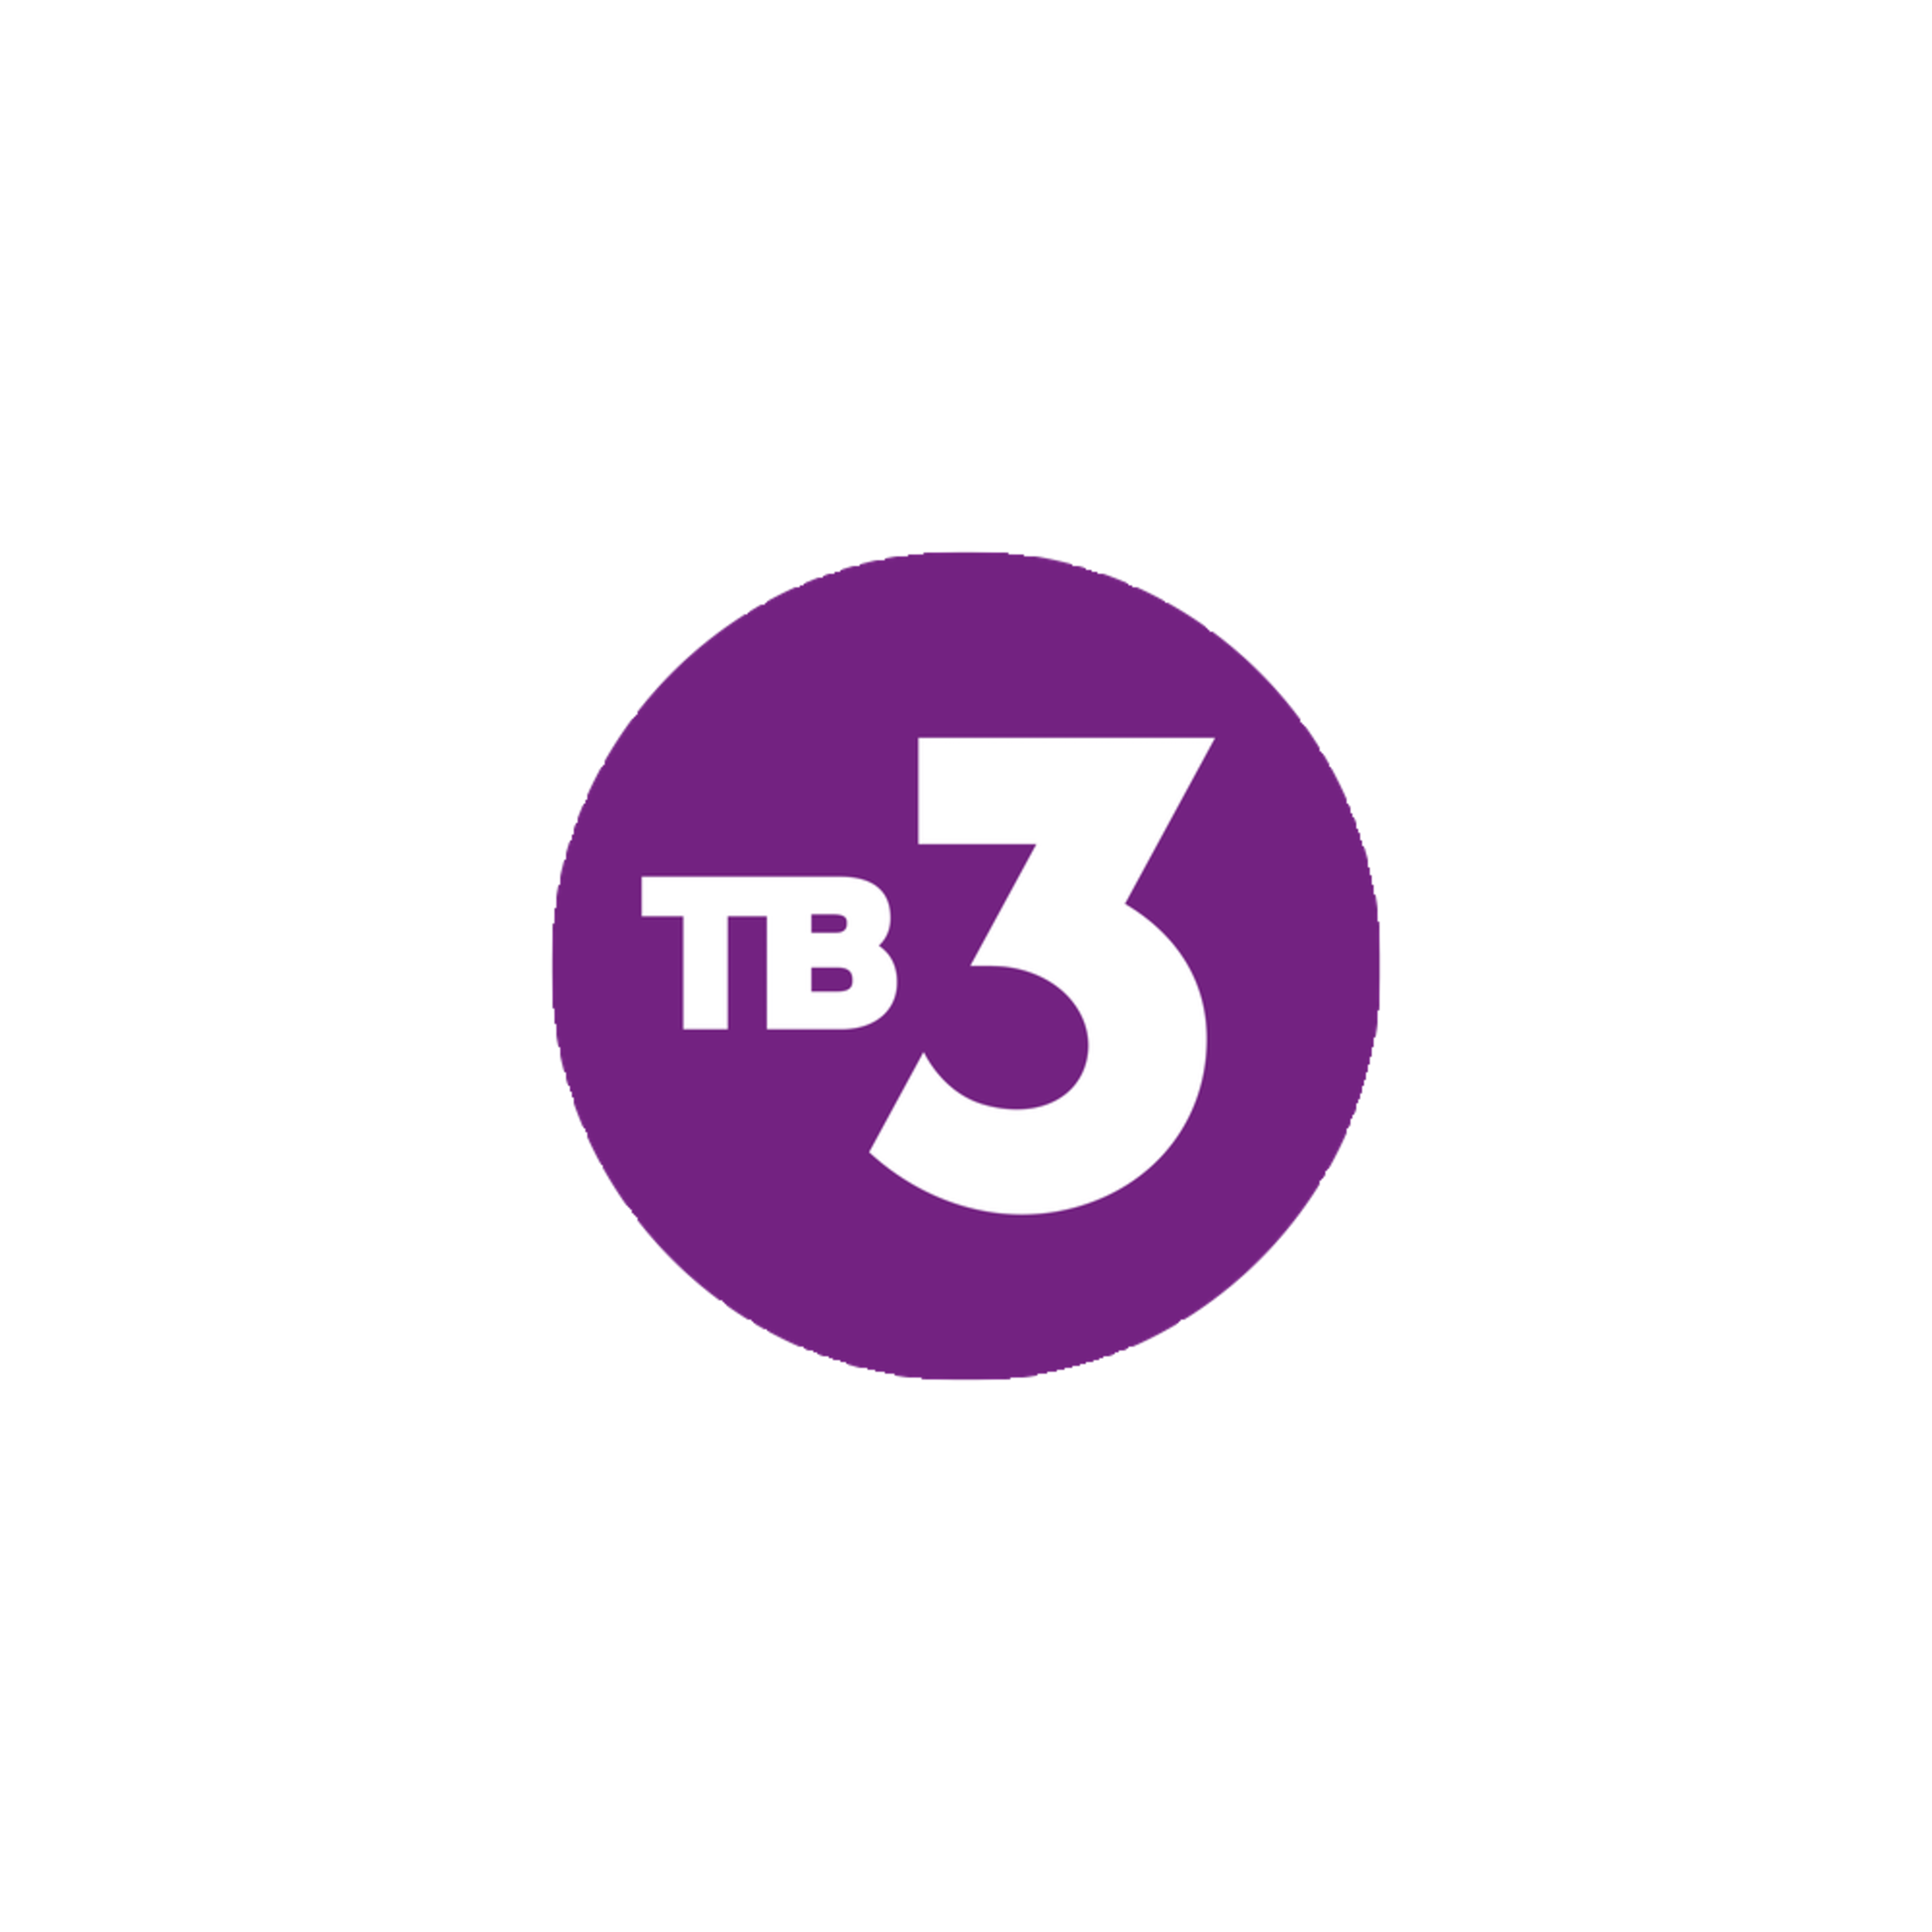 Канал 3.3. Тв3 логотип. Телеканал тв3. Логотип канала тв3. 3 Канал.